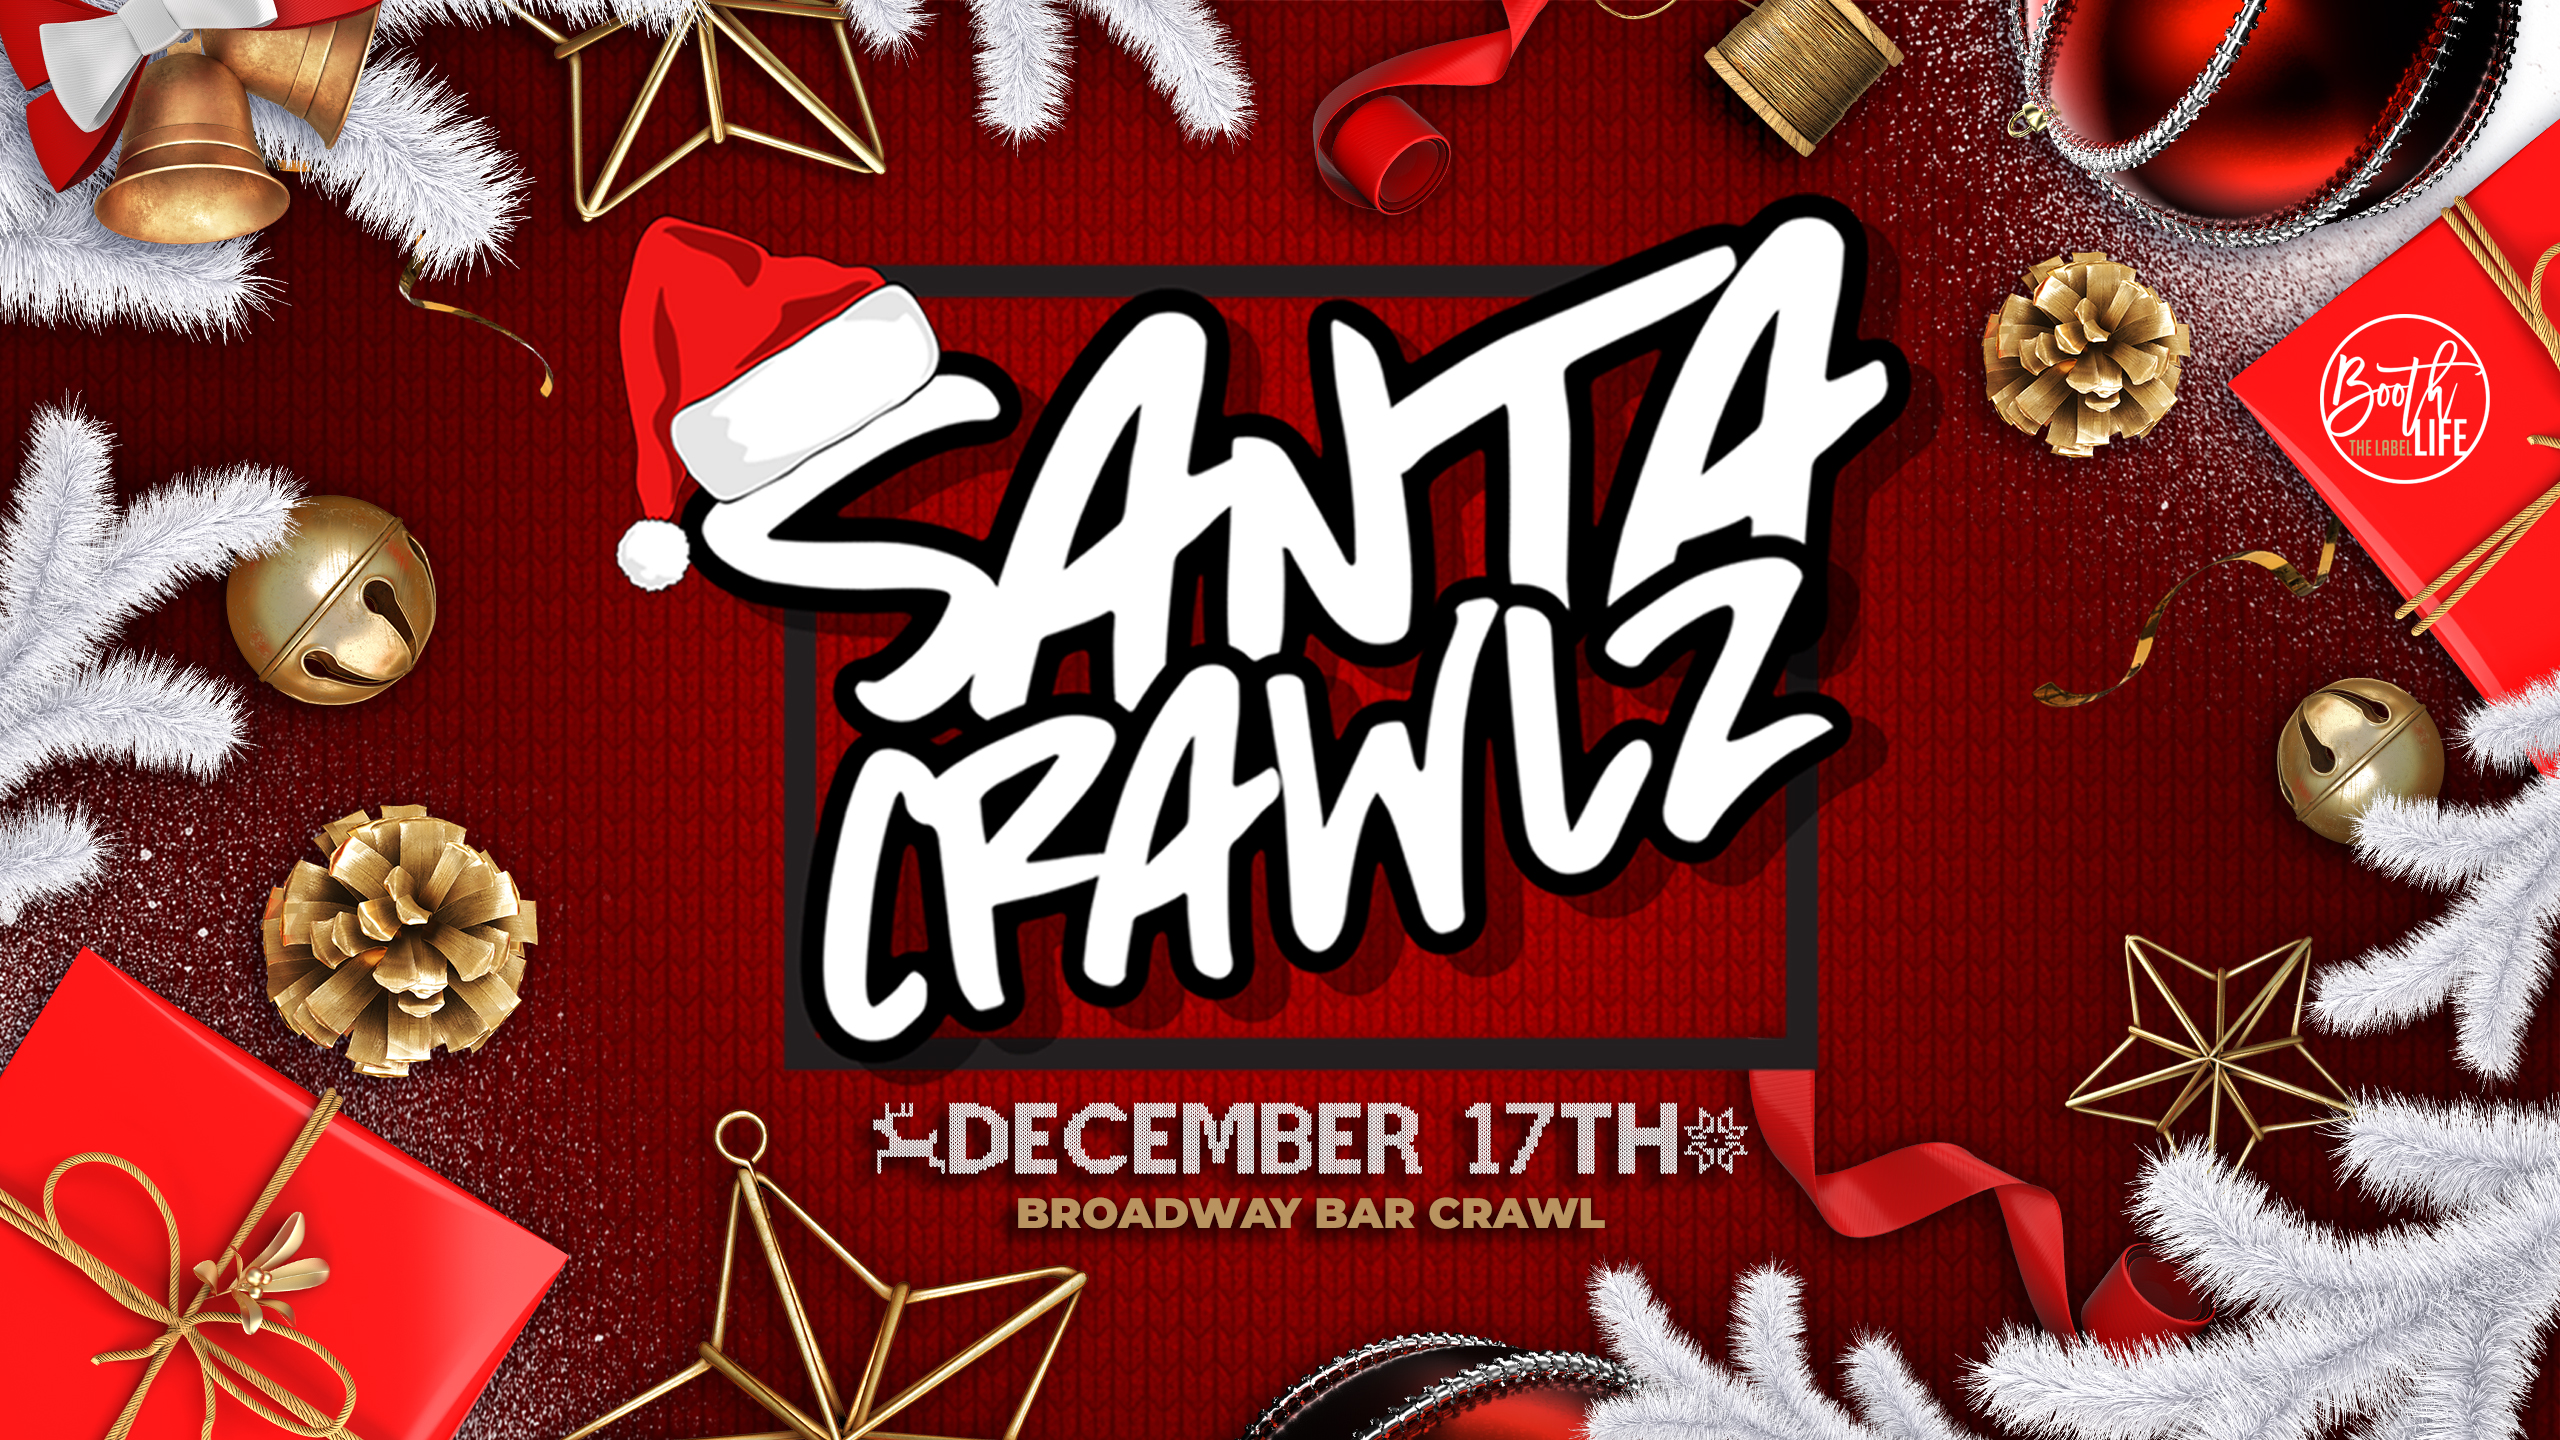 Santa Crawlz Nashville Santa Con Nashville Broadway Bar Crawl Holiday Santa Event